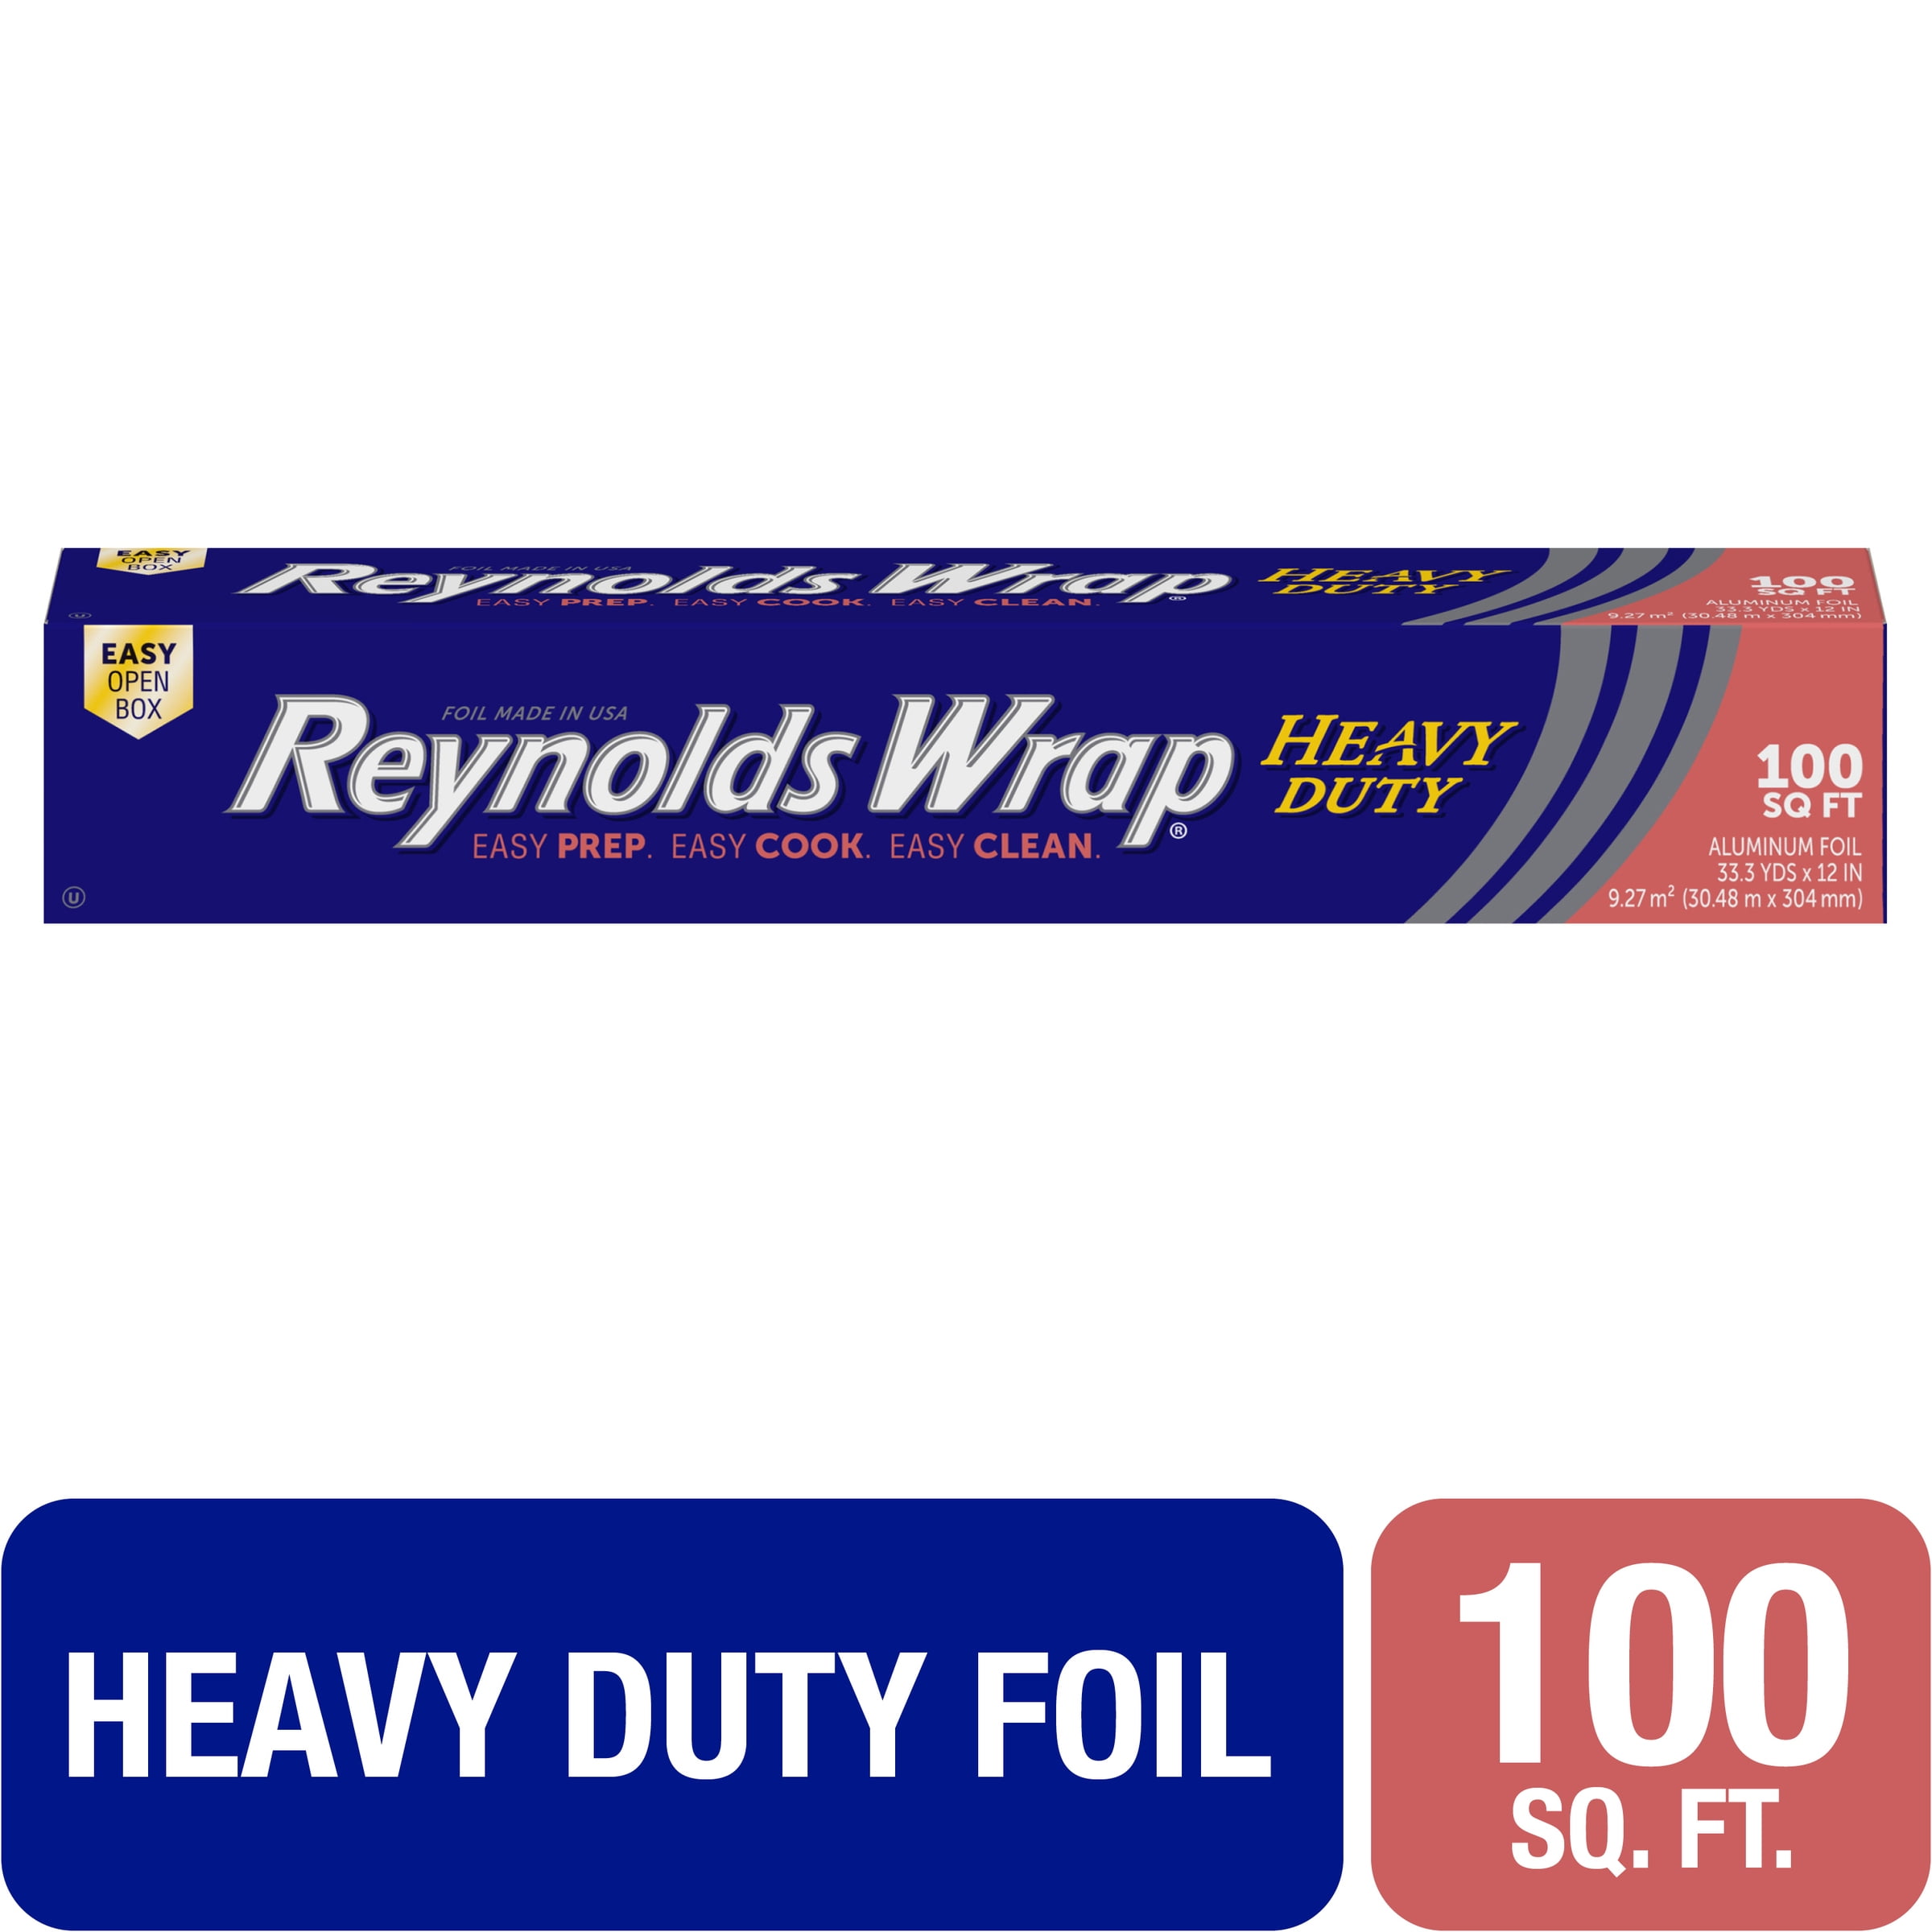 How to set up Reynolds Wrap Aluminum Foil 